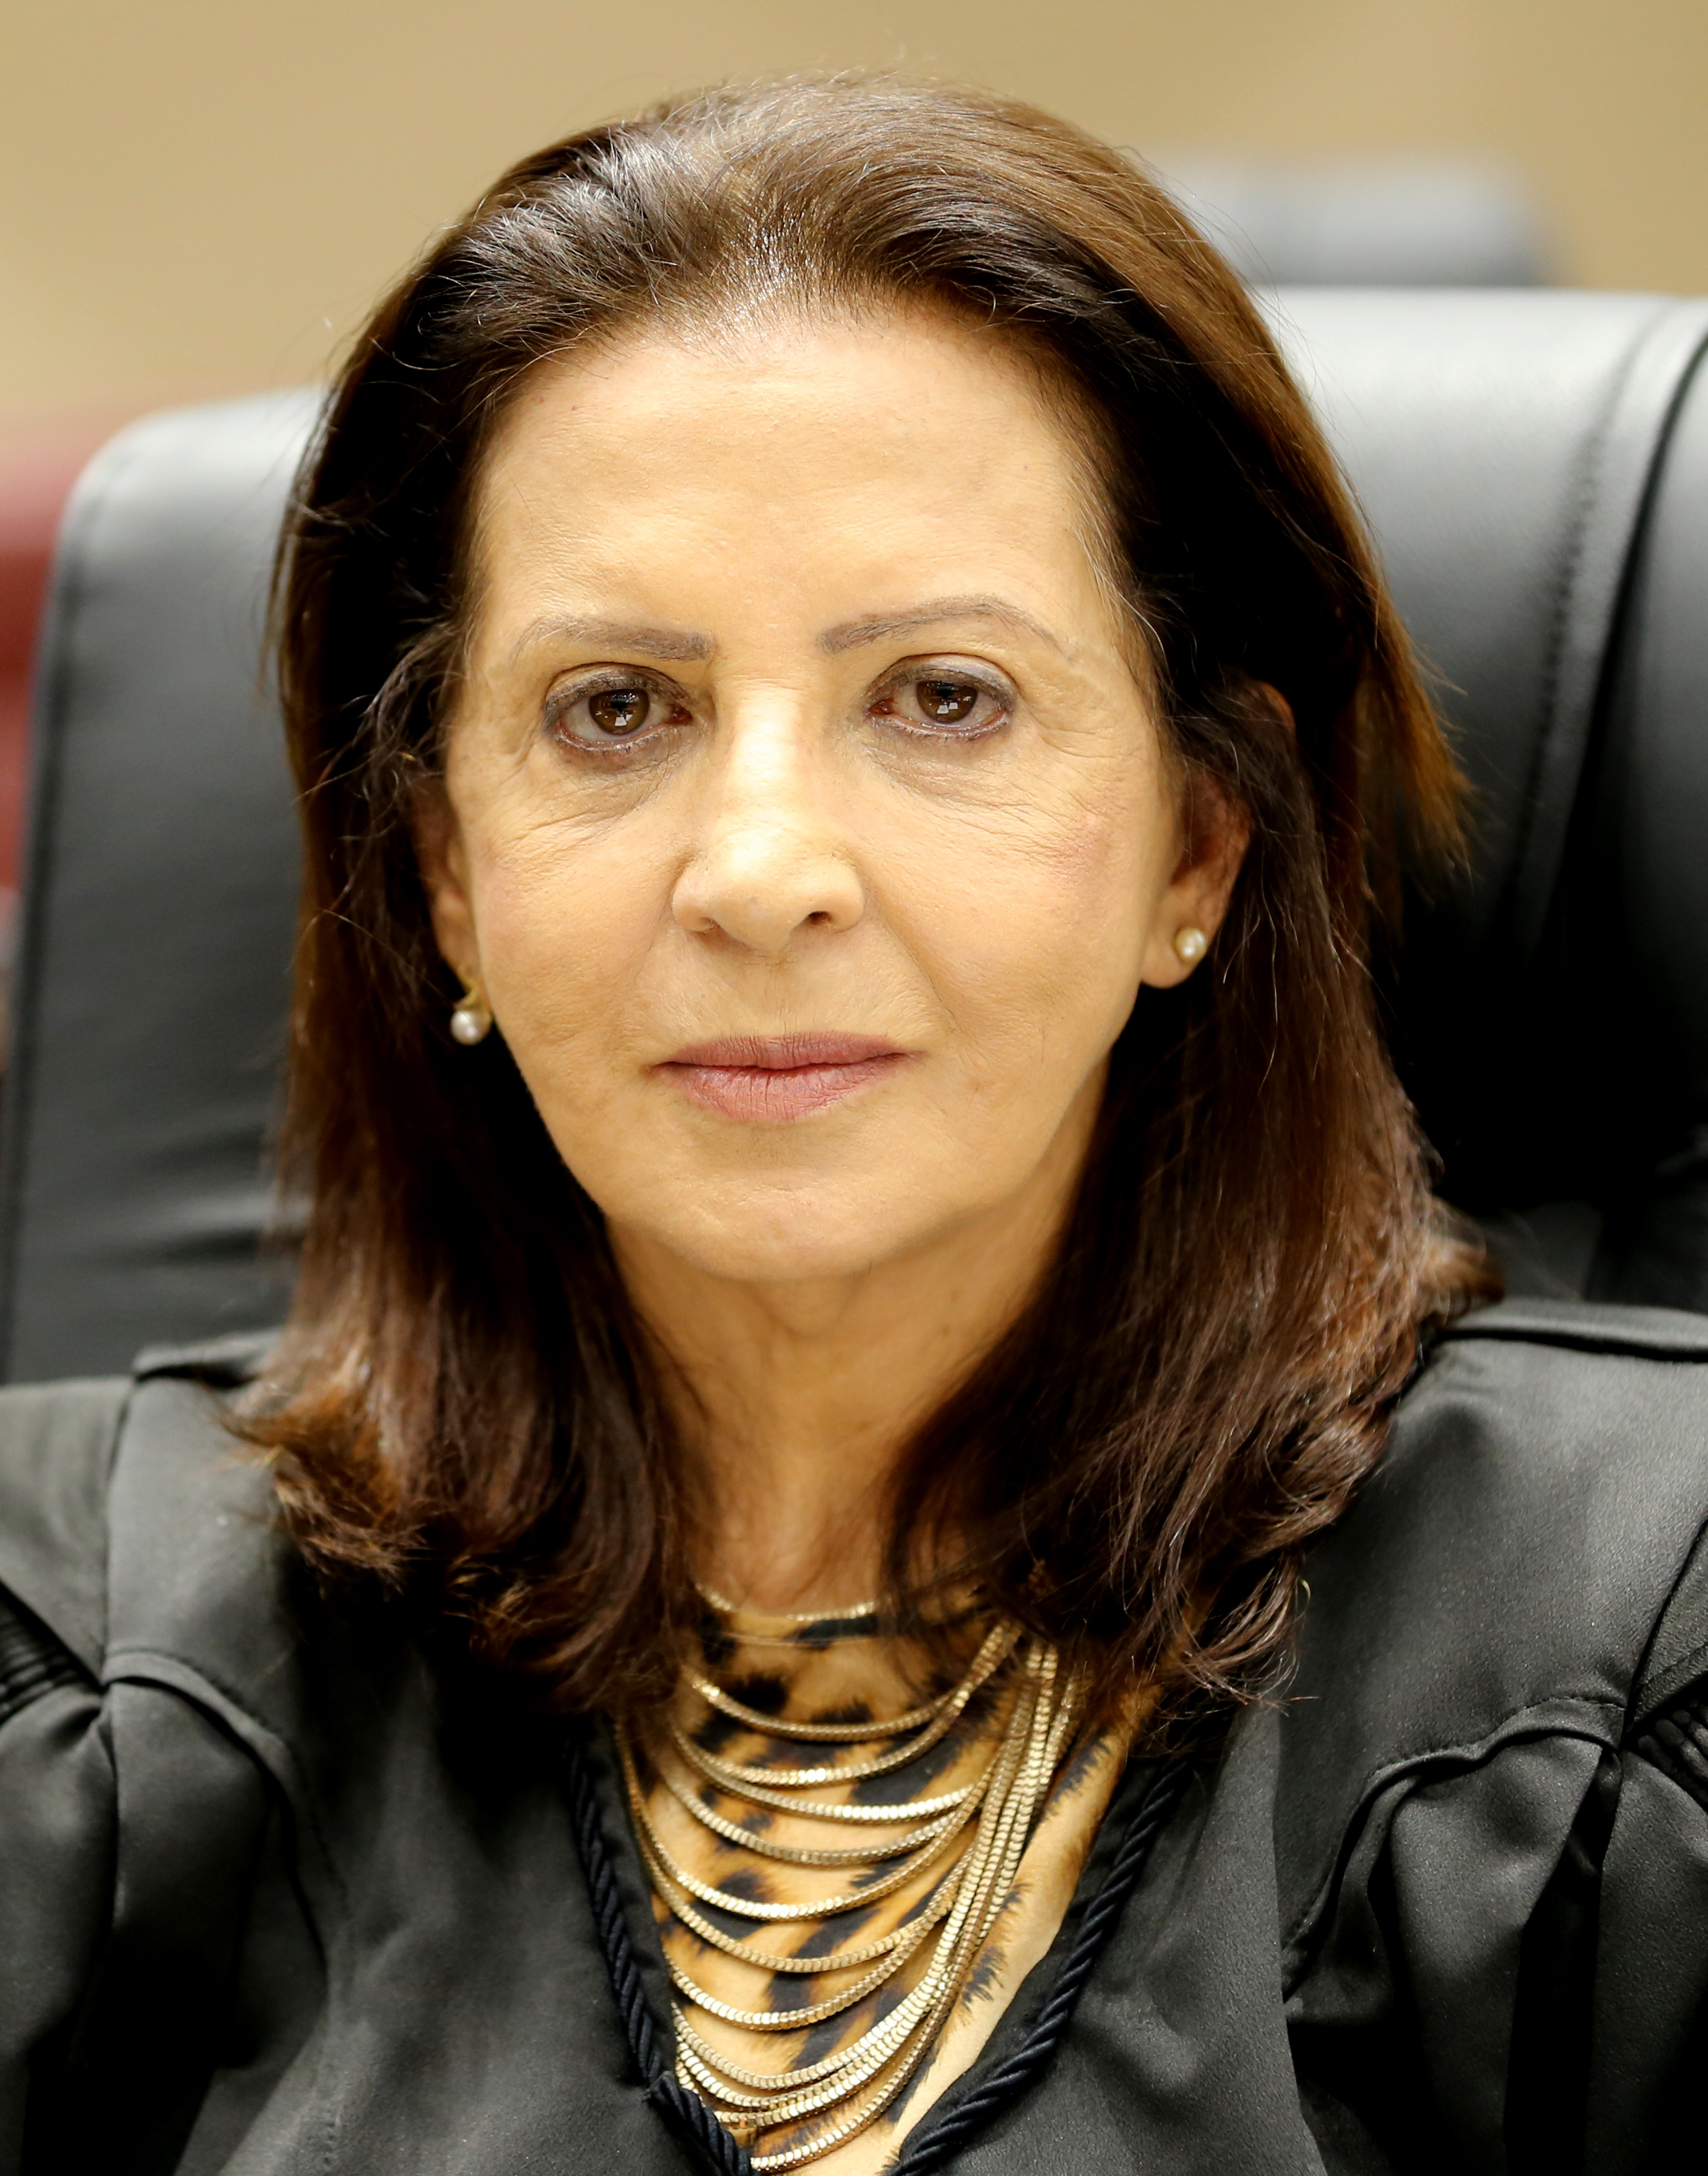 Juíza Carmecy Rosa Maria Alves de Oliveira: